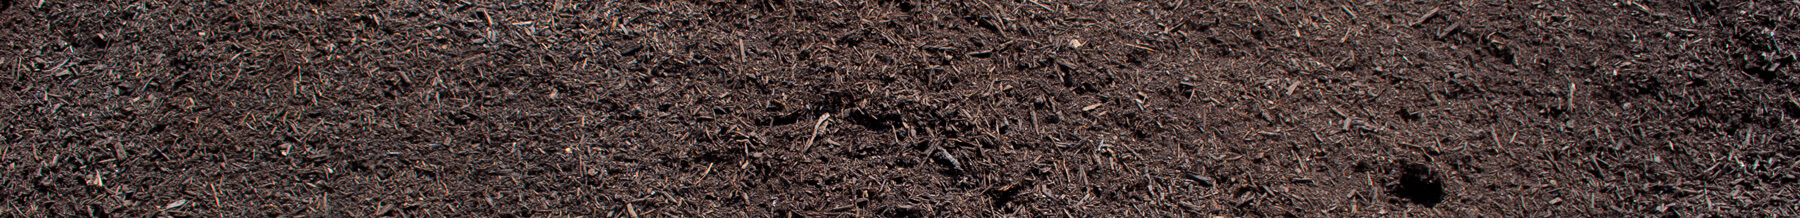 close up wide shot of 1/2 inch landscaper's compost